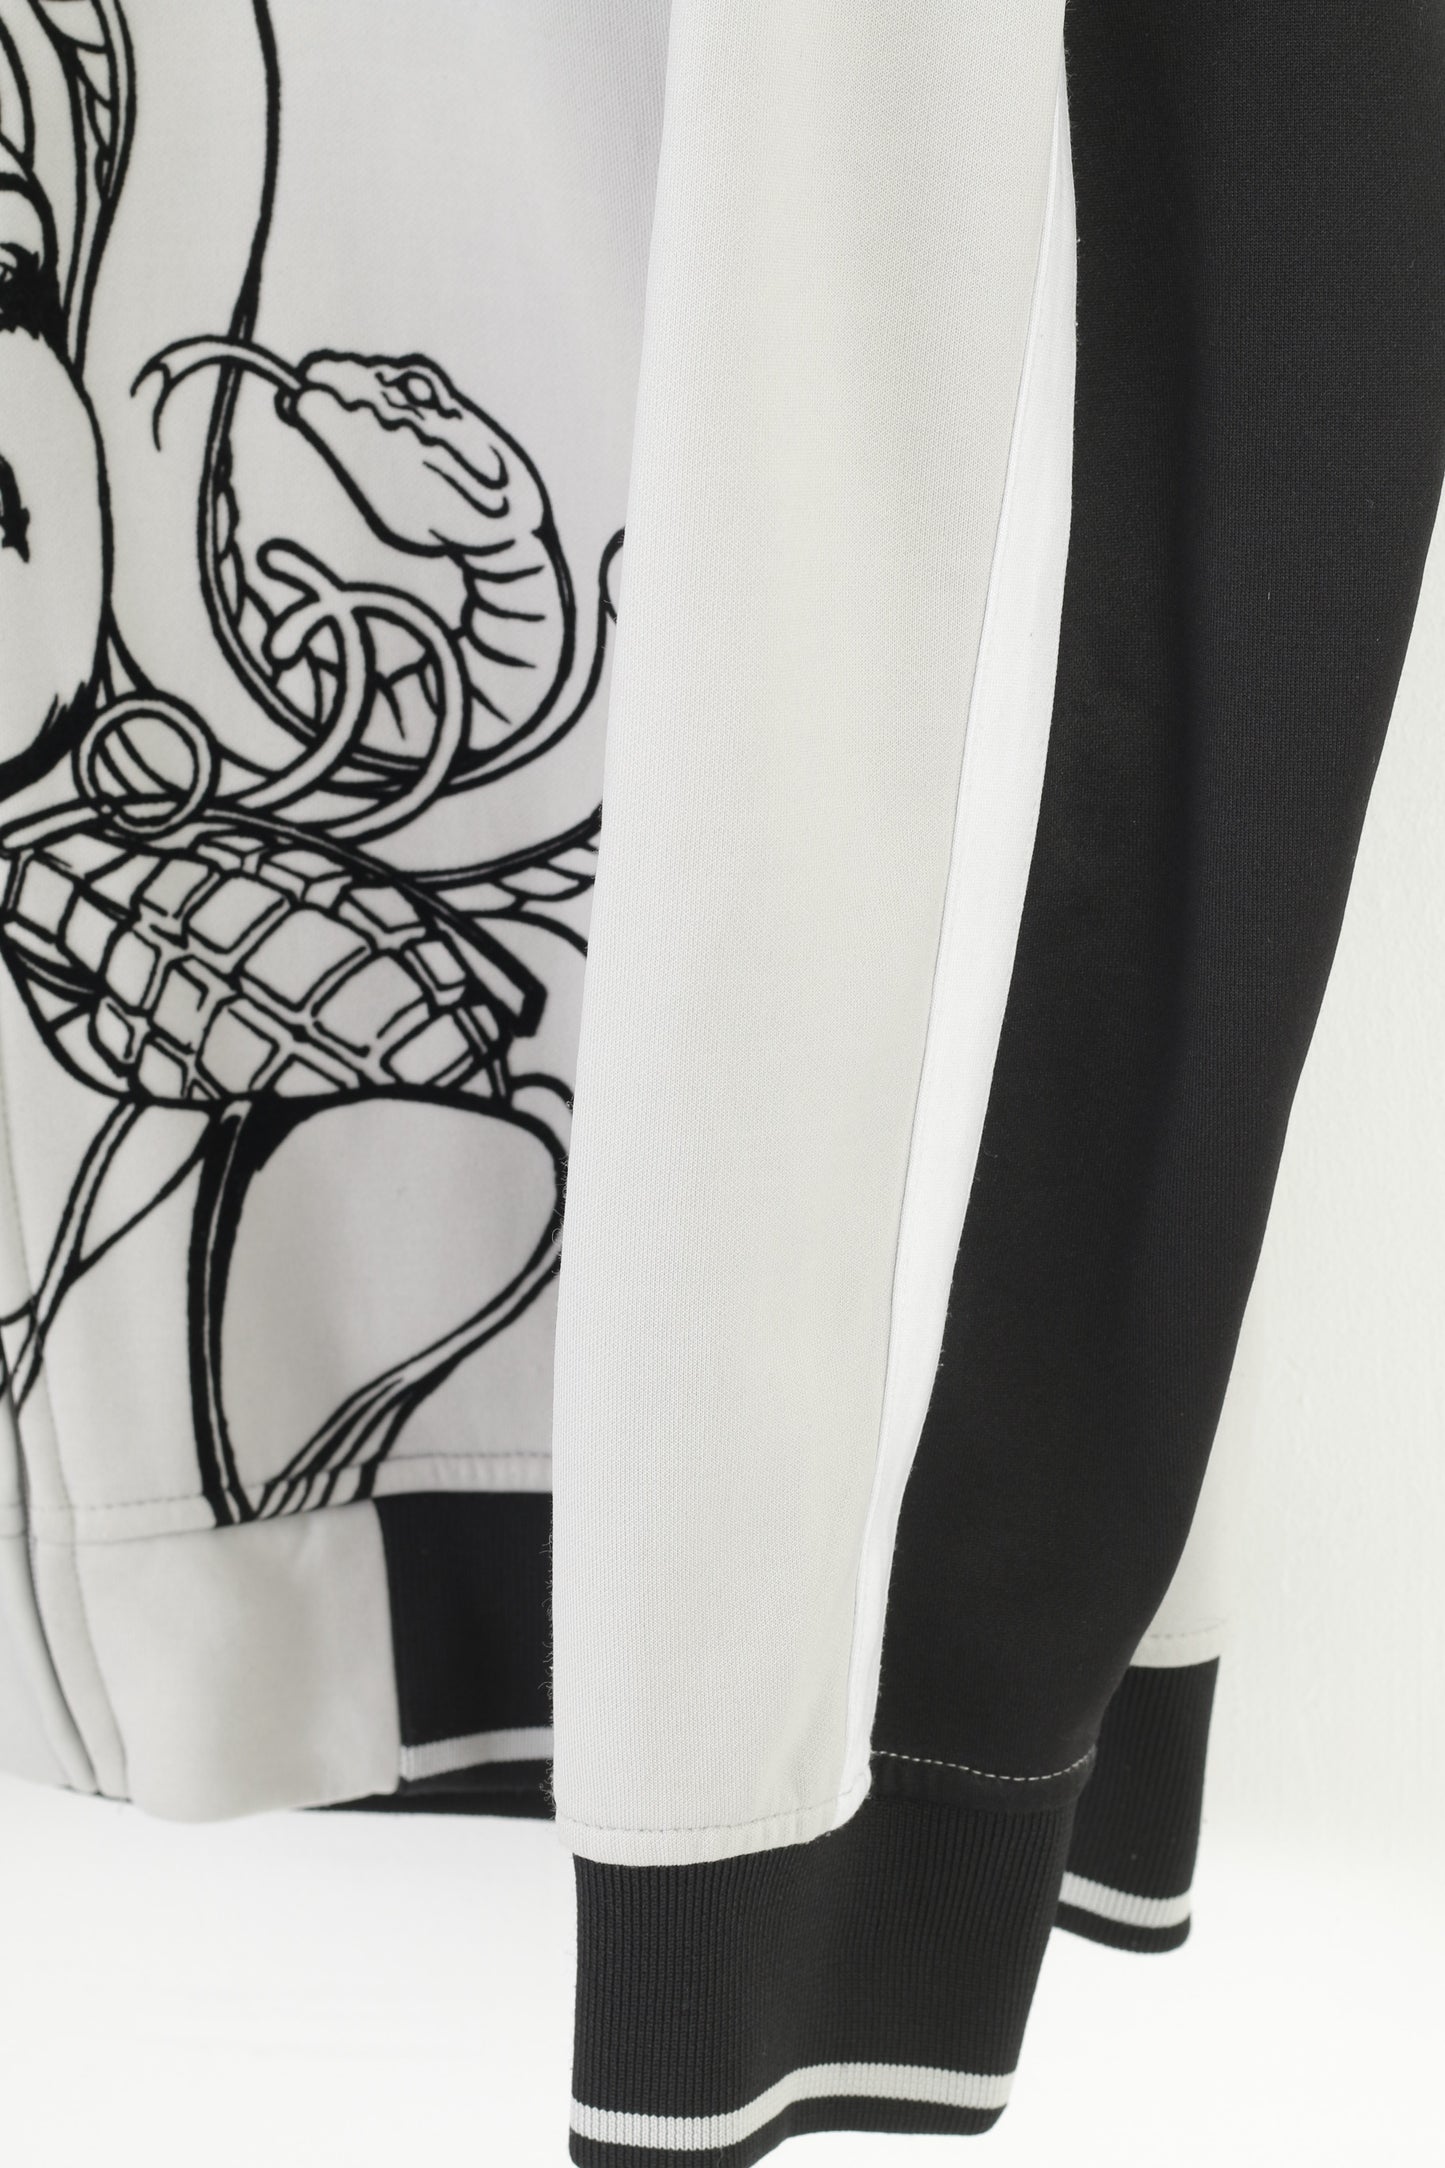 Eckou Unltd Men L Sweatshirt Grey Cotton Woman Graphic Design Zip Up  Pockets Top